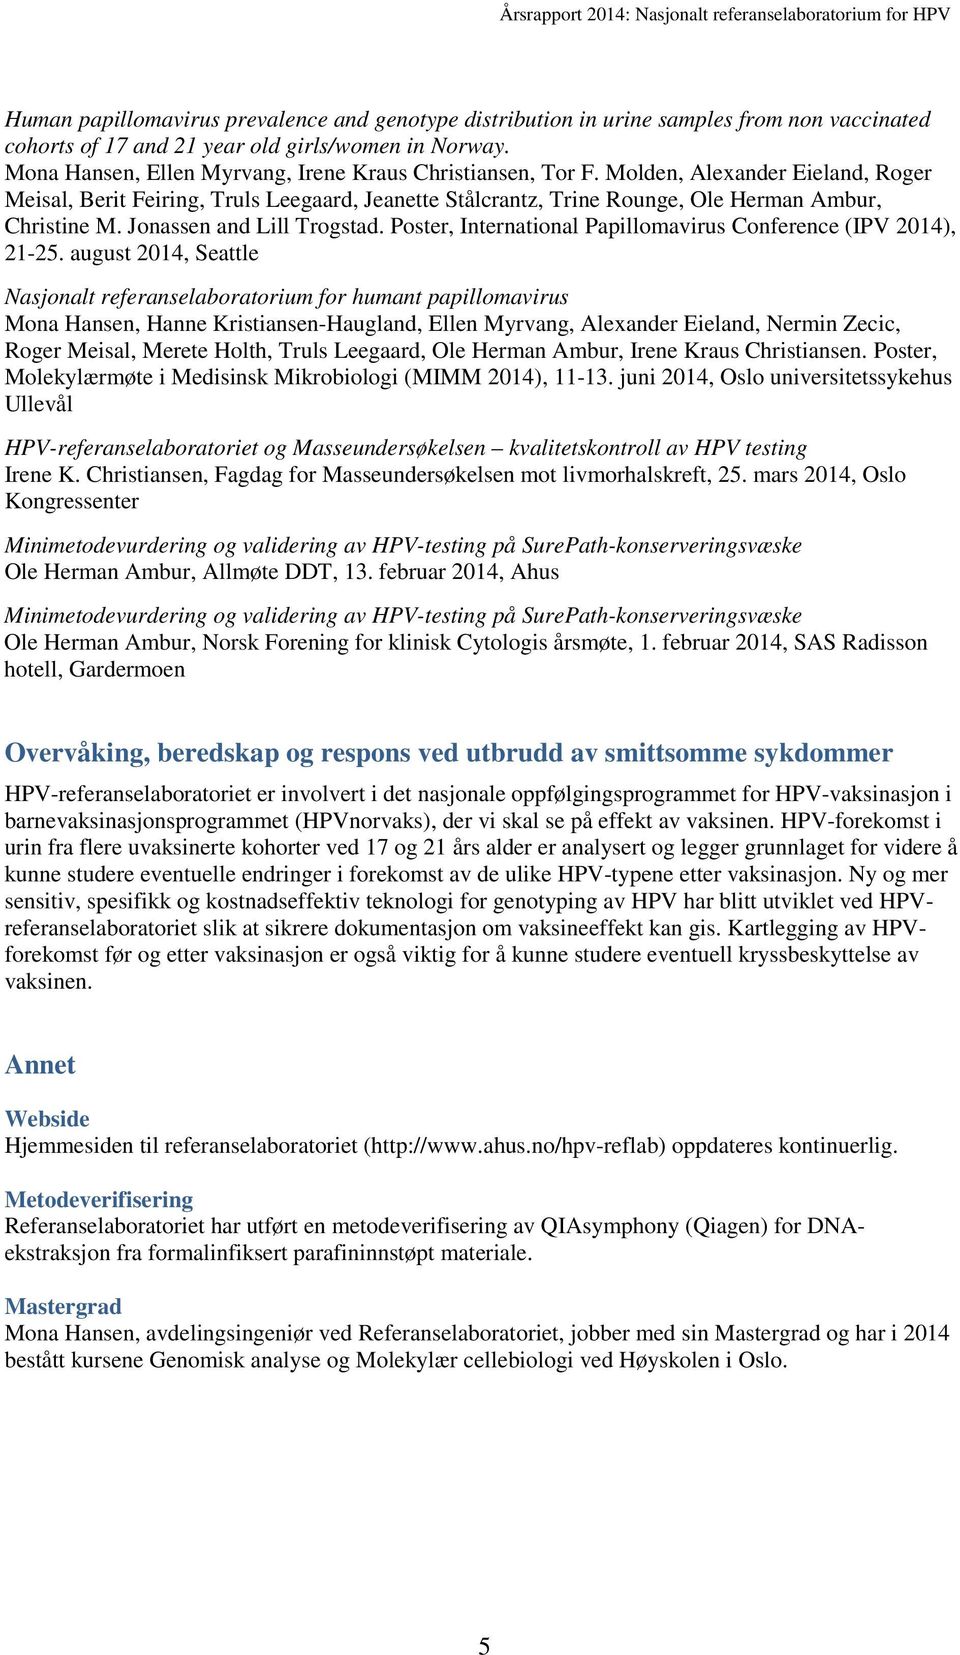 Jonassen and Lill Trogstad. Poster, International Papillomavirus Conference (IPV 2014), 21-25.